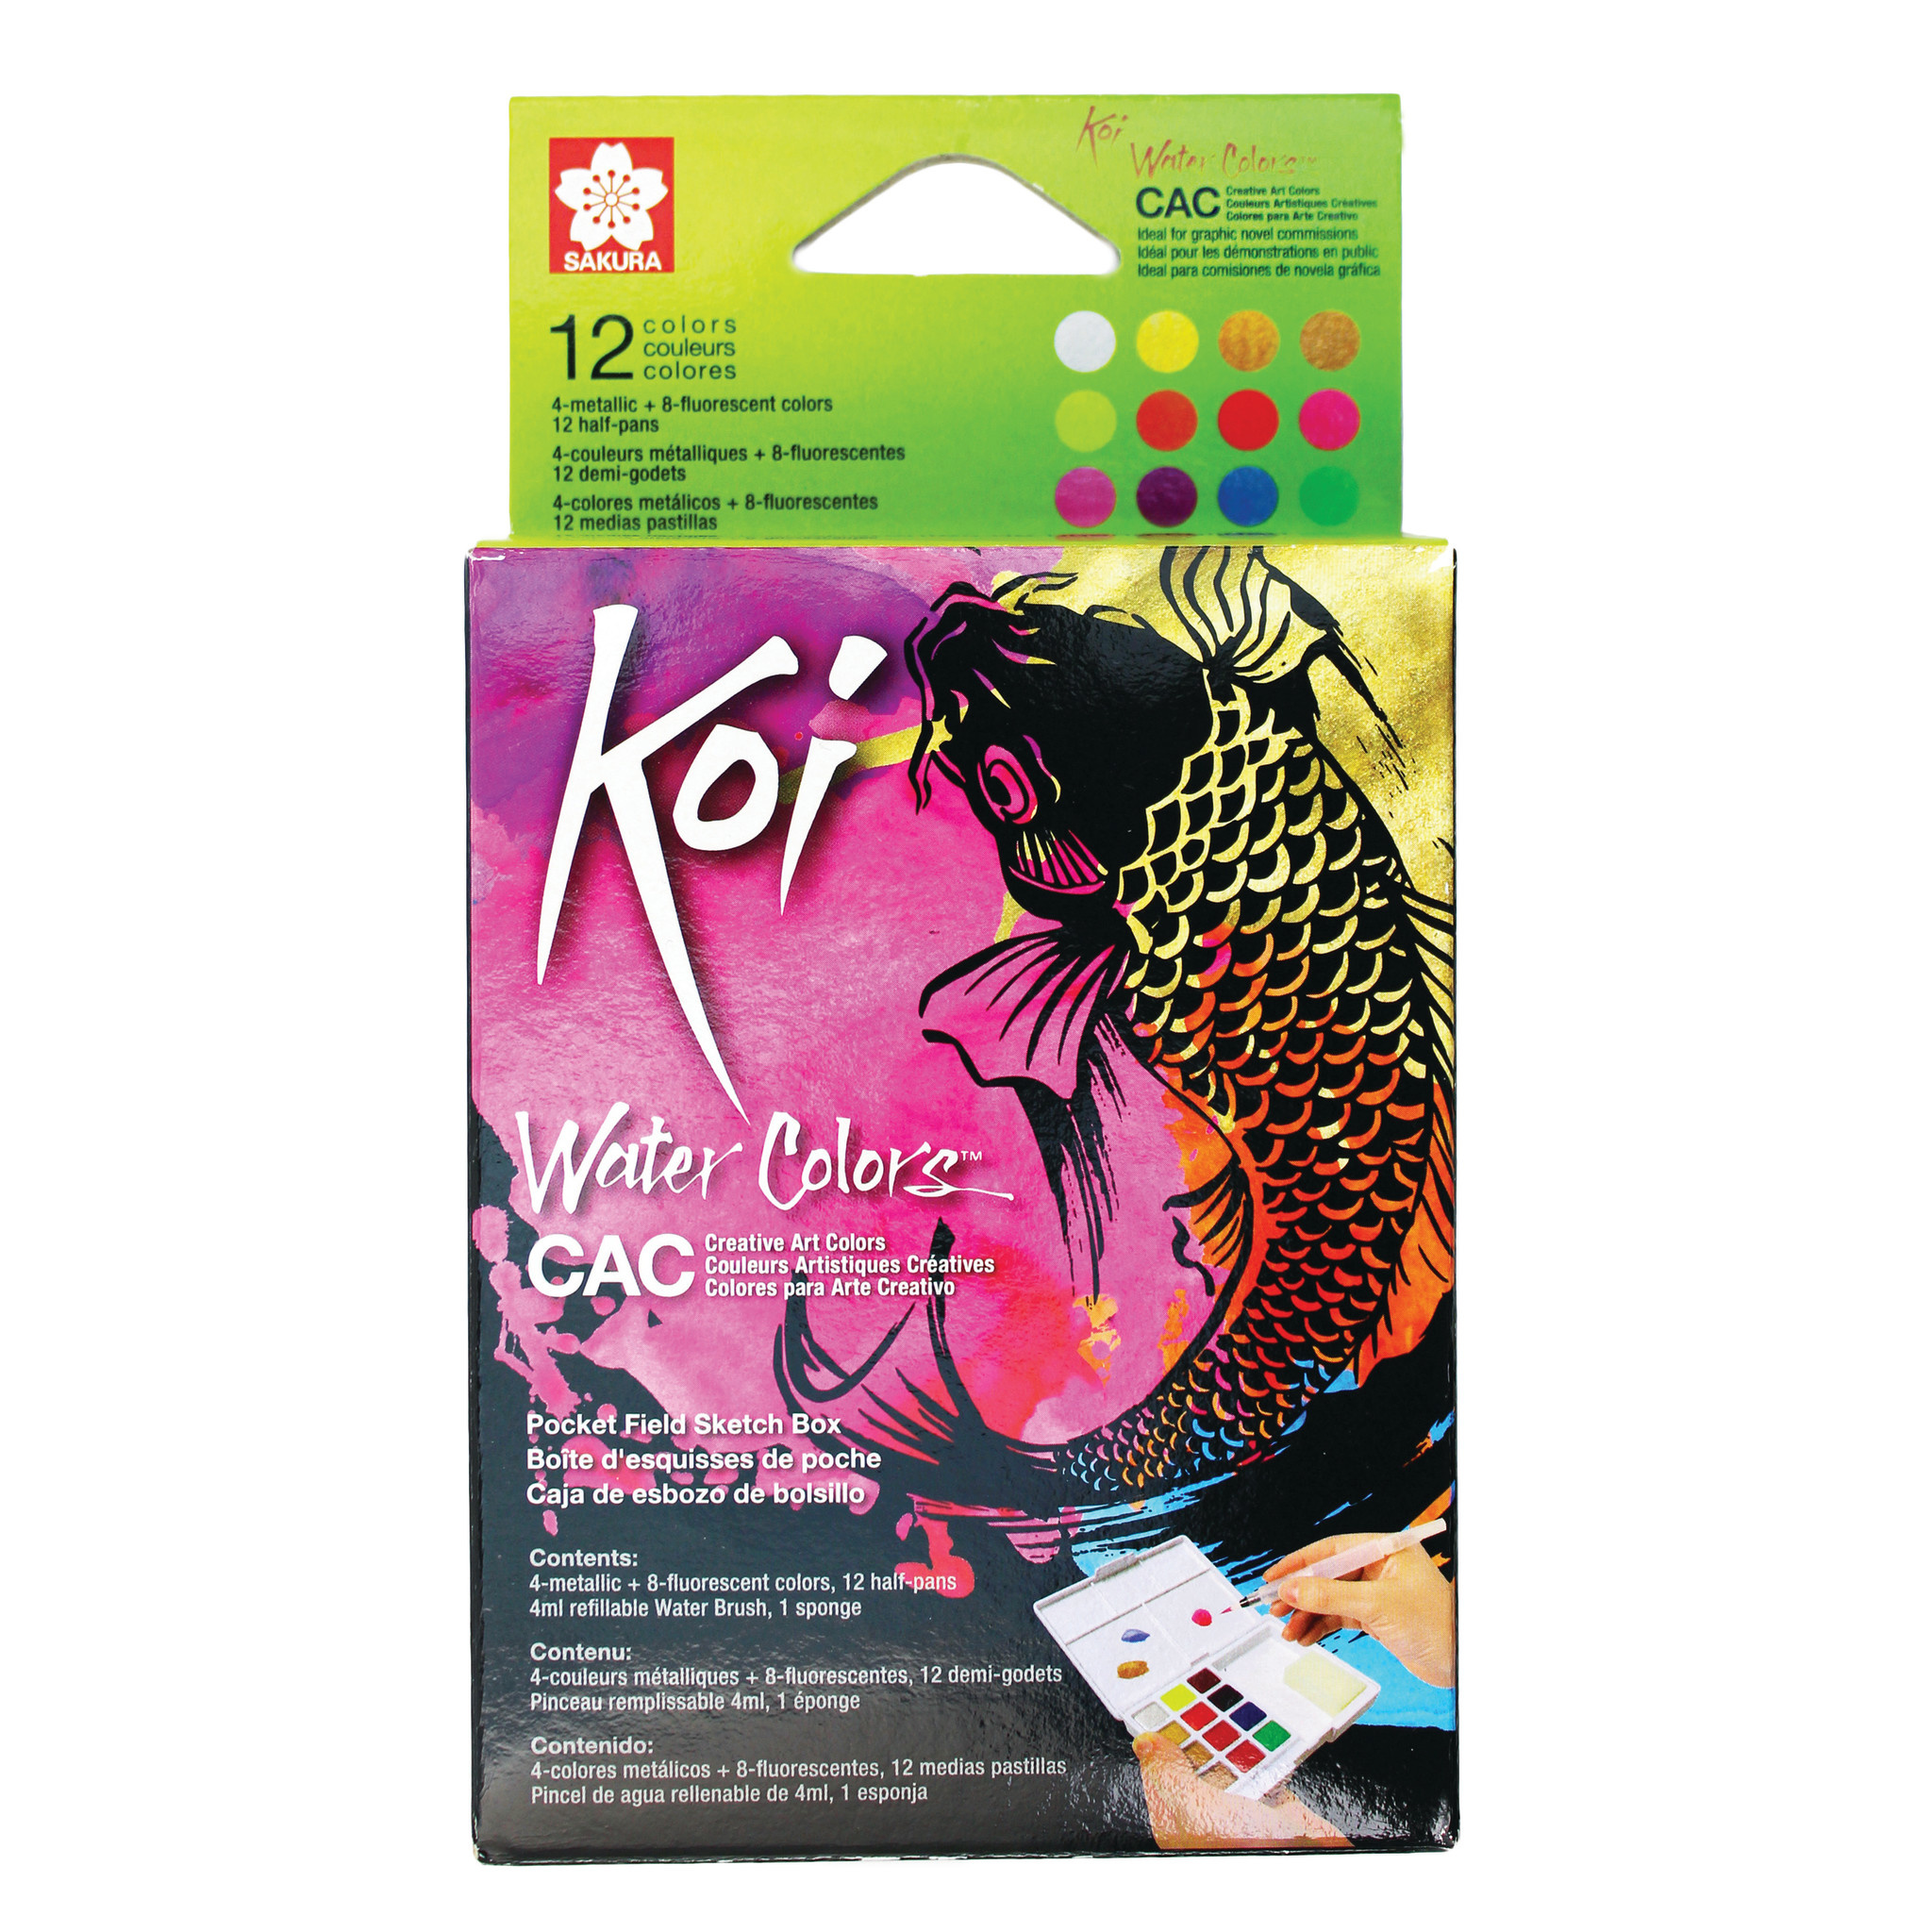 Koi Watercolors Pocket Field Sketch Box - Set of 12